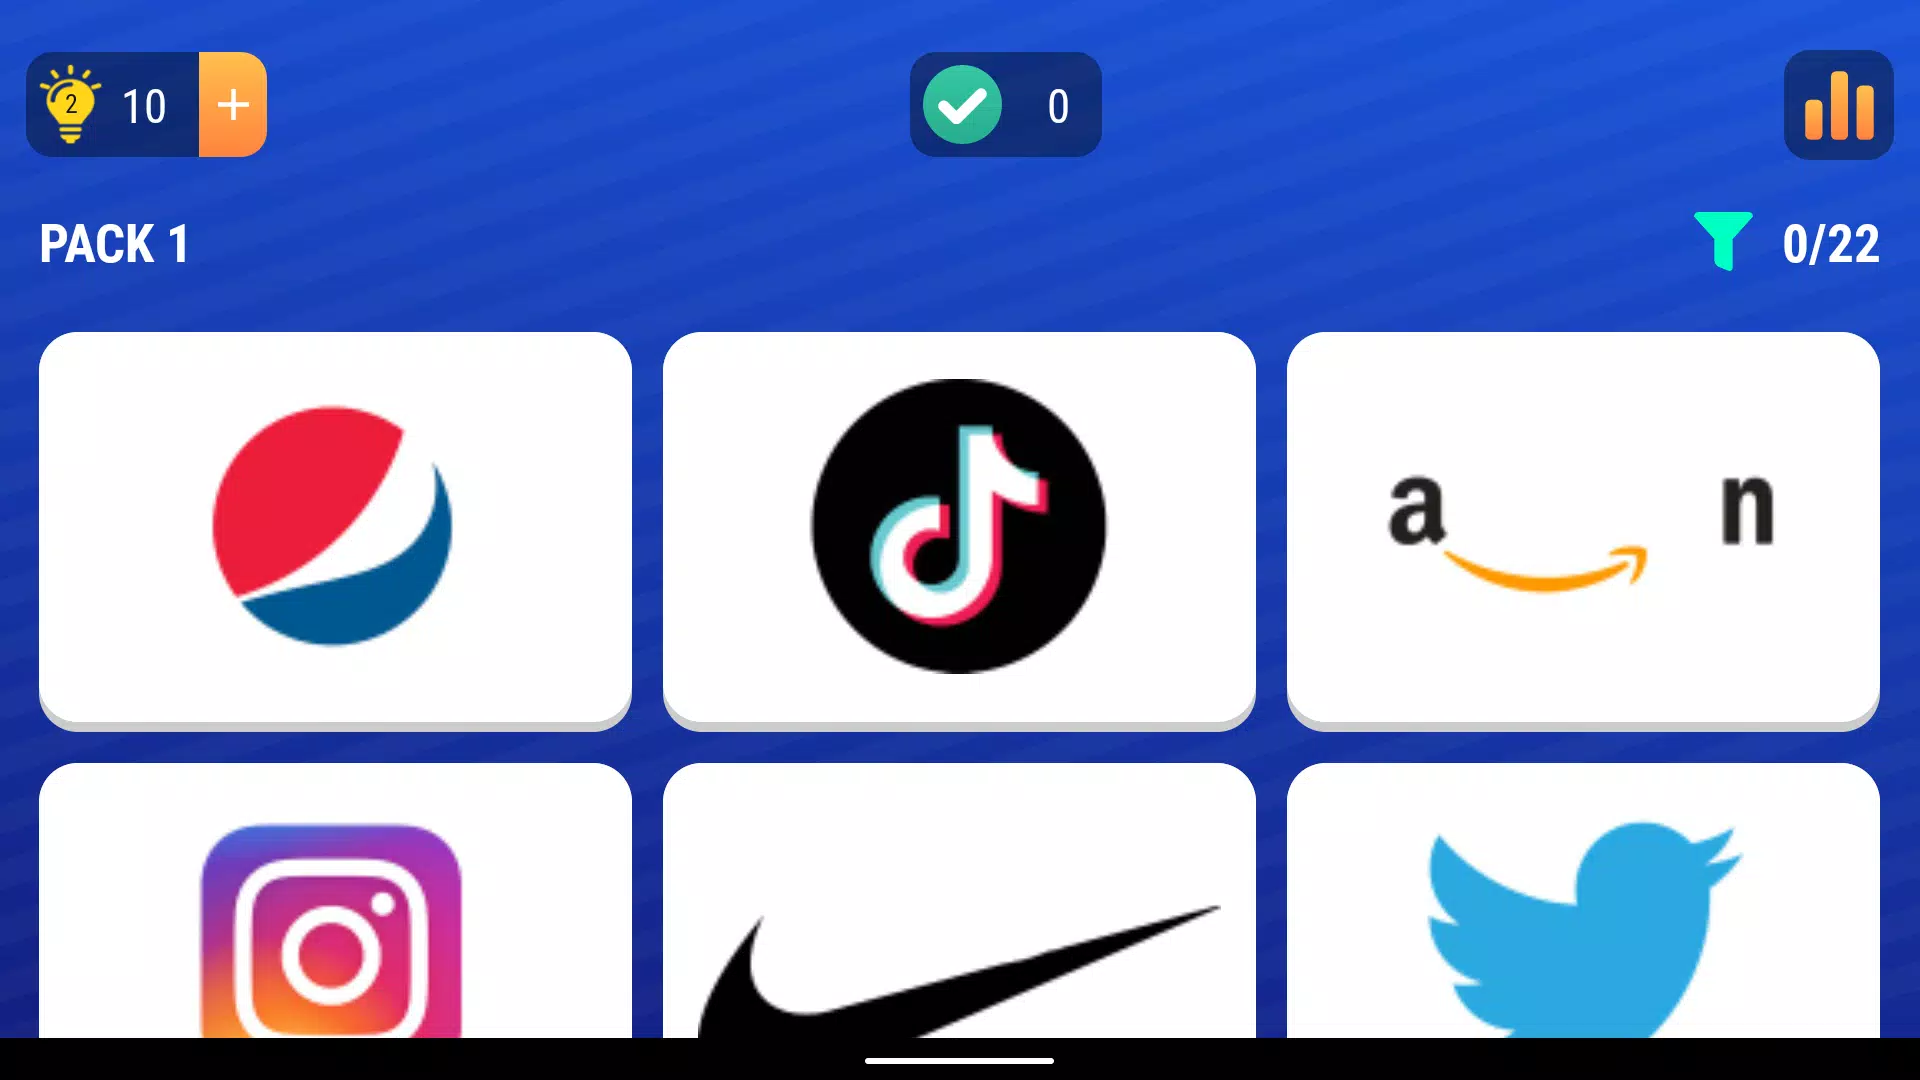 Answers for Logo Quiz на андроид - скачать Answers for Logo Quiz